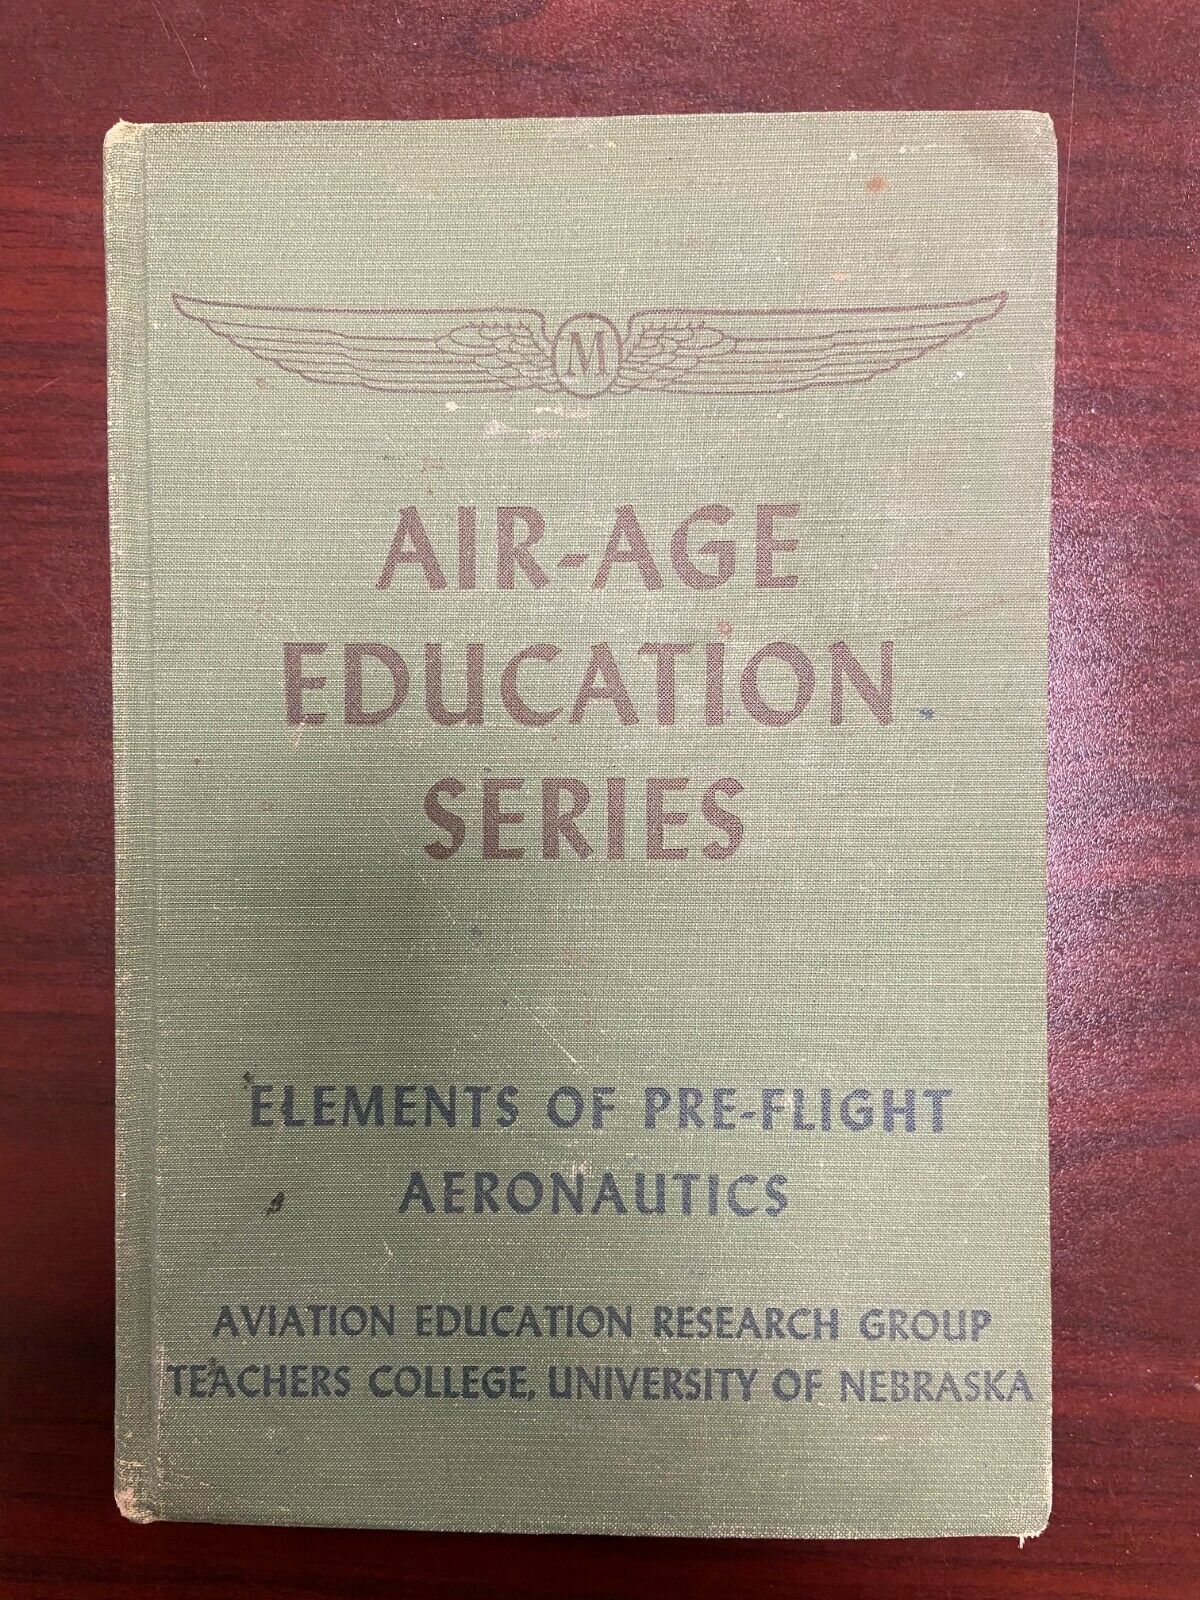 Air-Age Education Series Elements of a Pre-Flight Aeronautics